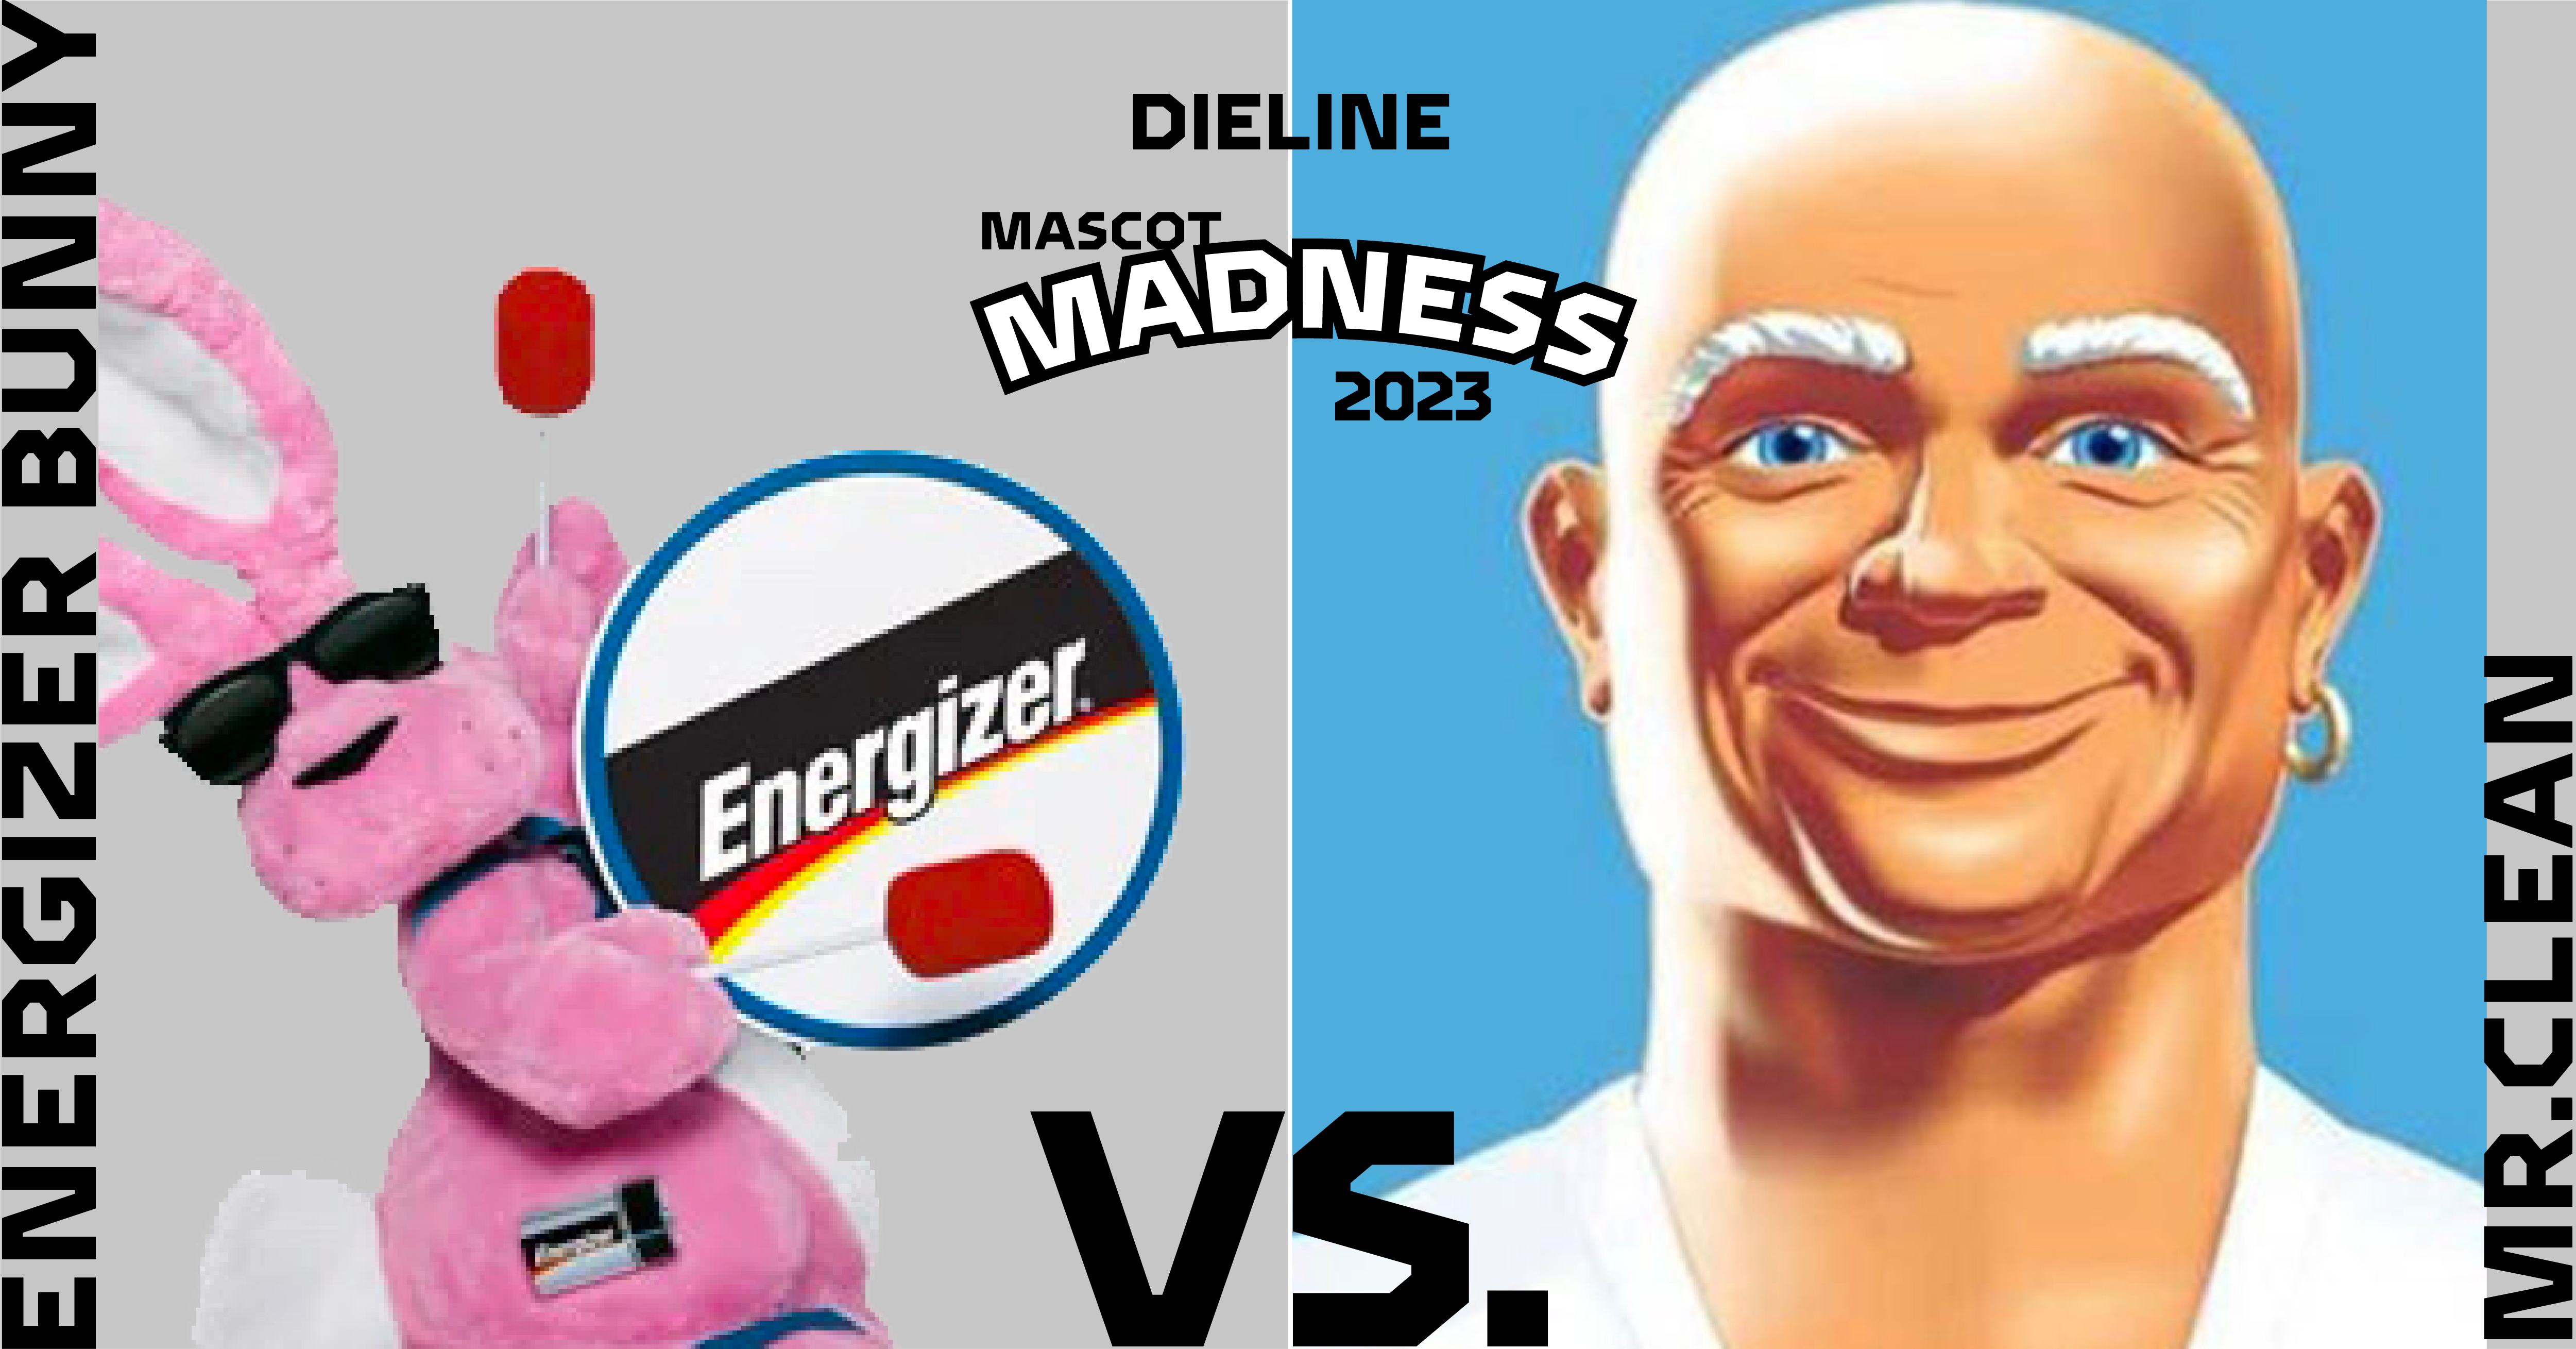 DielineMascotMadness_vs-17.png